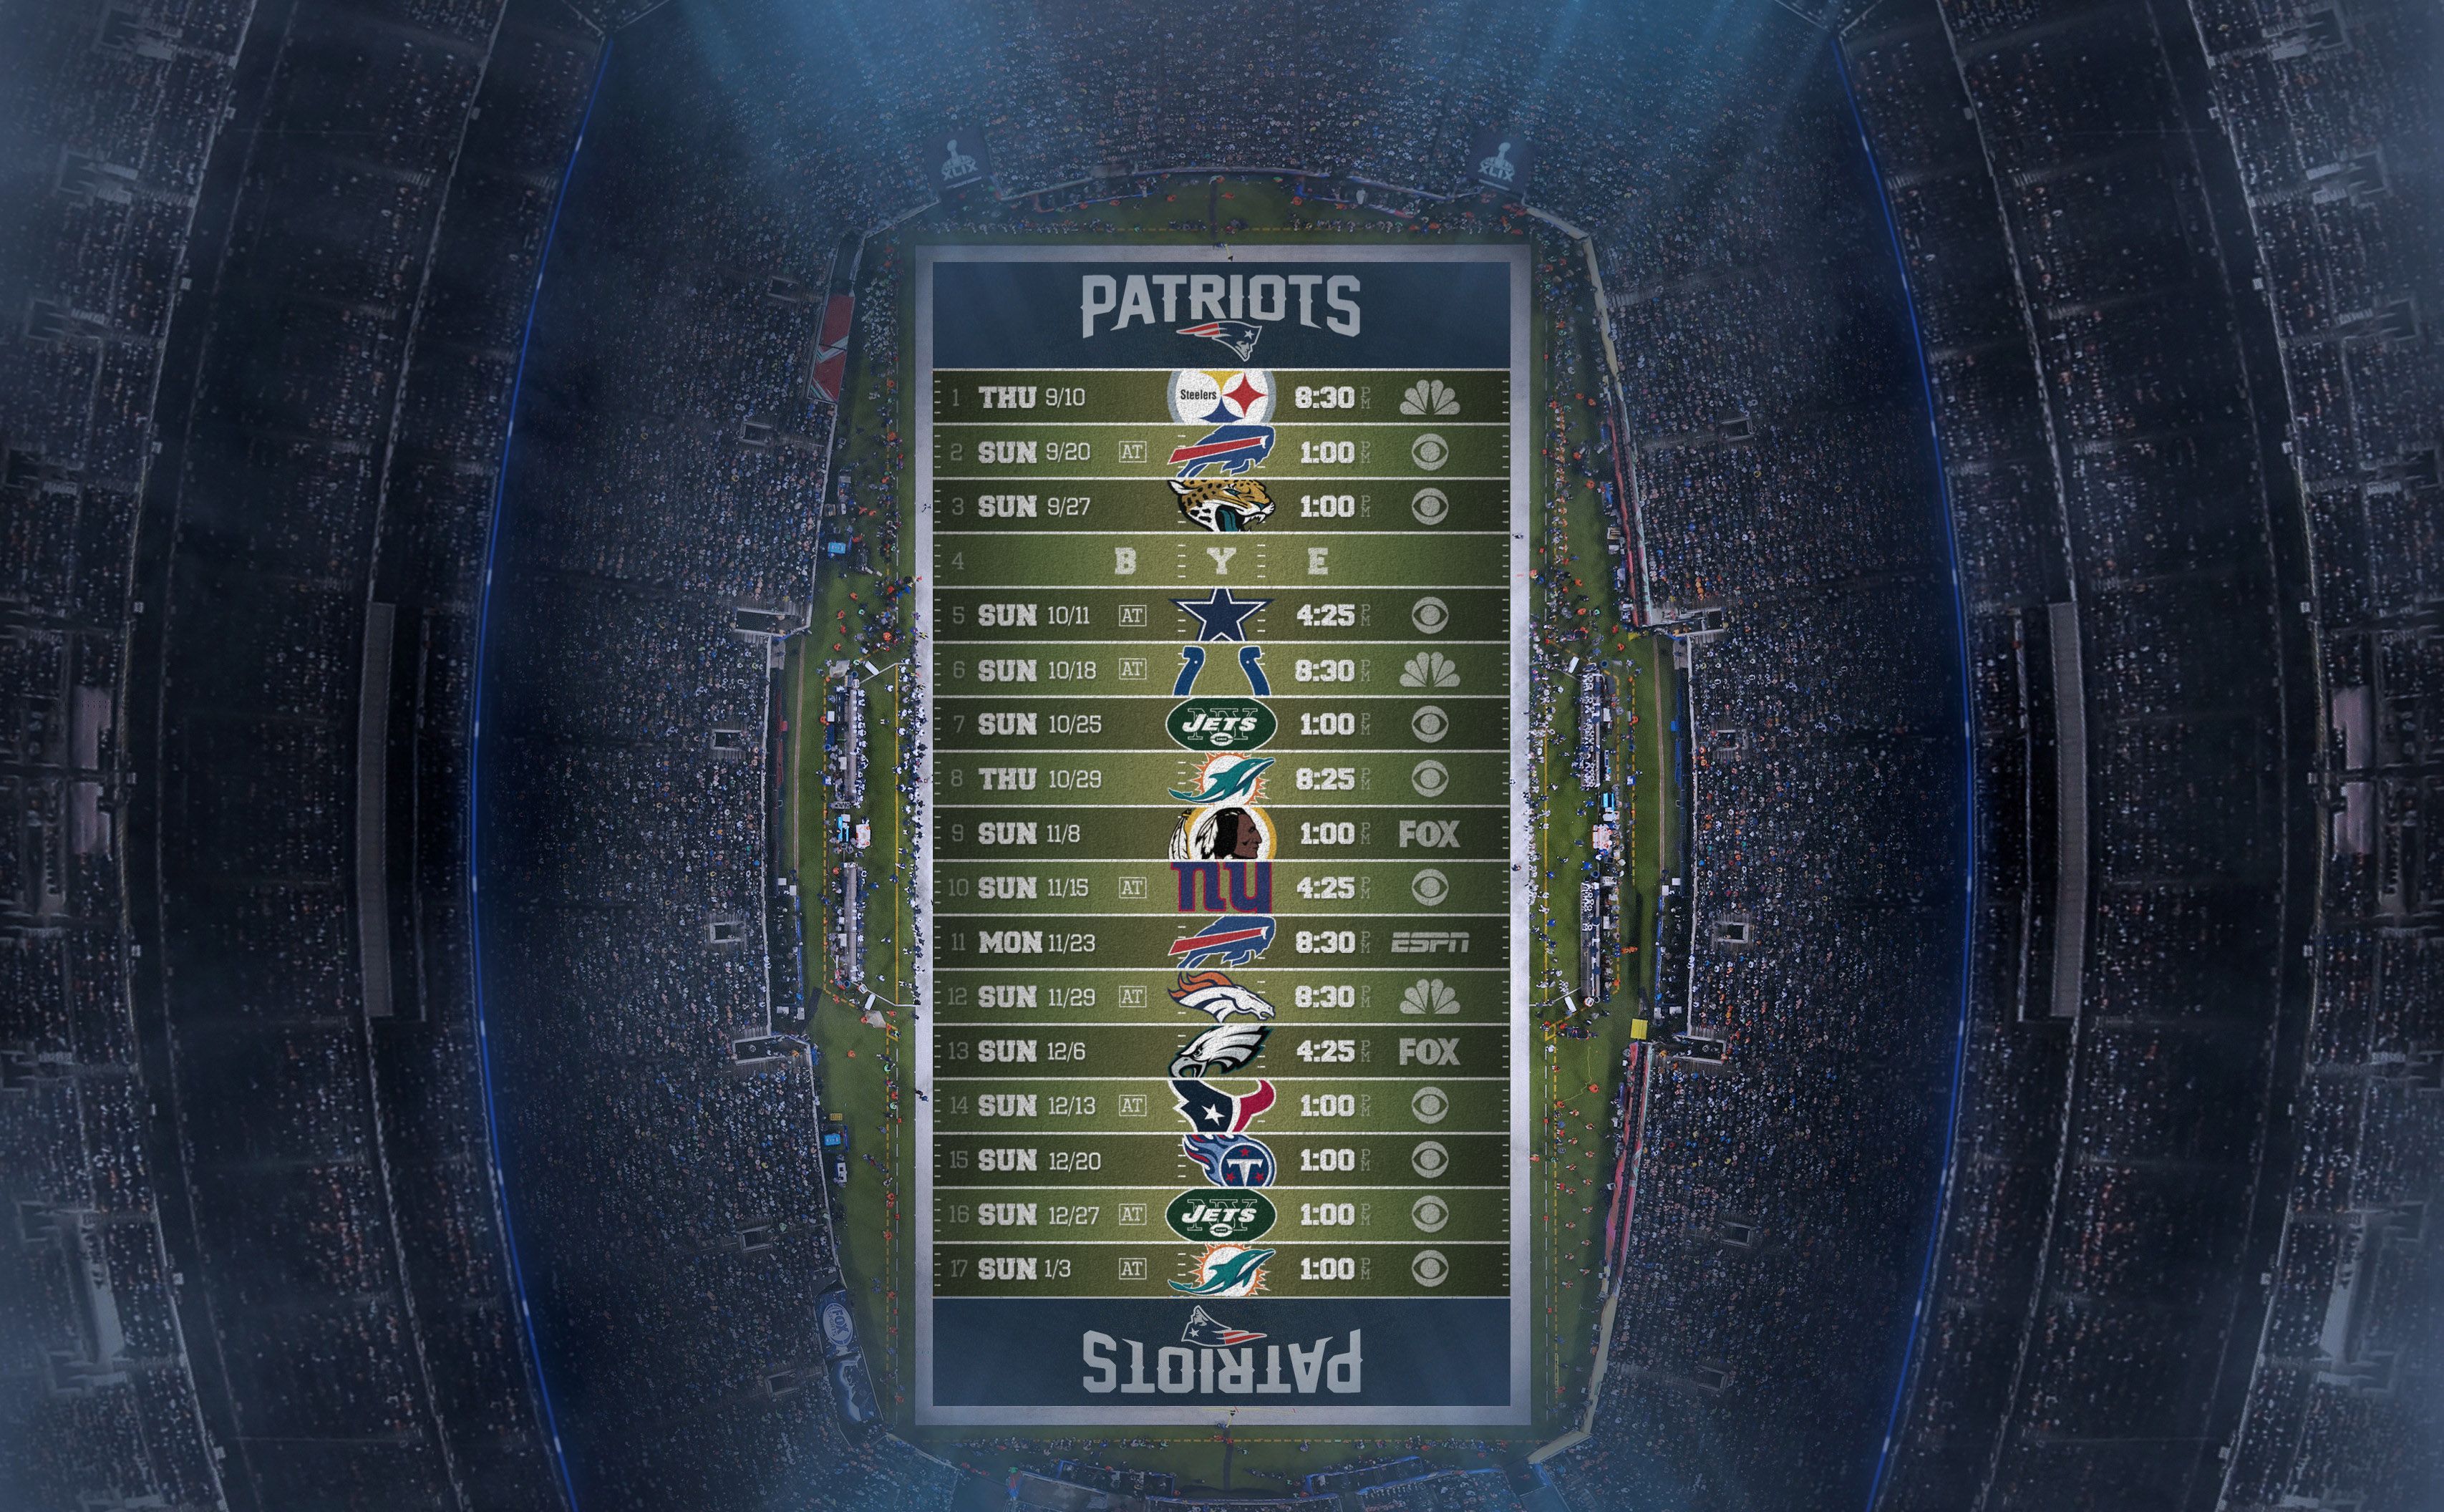 Patriots 2015 Mobile Schedule wallpaper (credit to /u/dbeat who ...